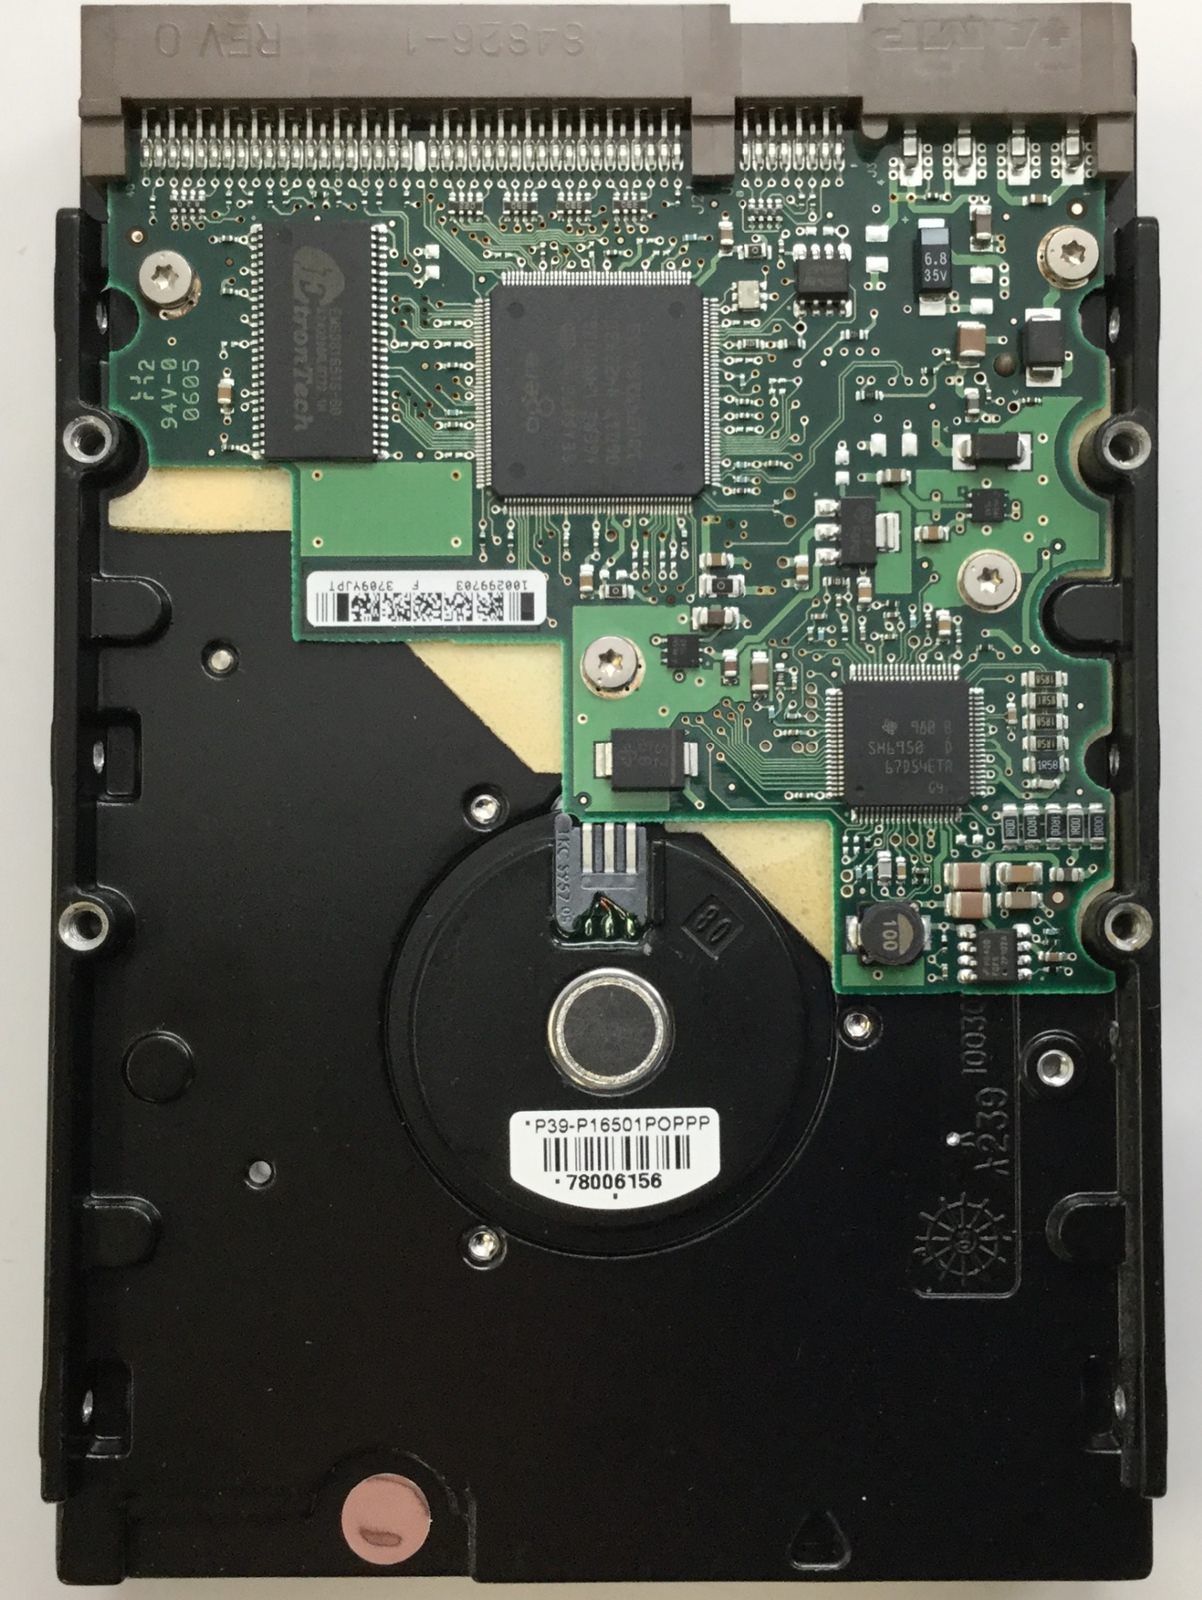 Siemens Sonoline Antares Ultrasound Seagate ST380011A Barracuda Hard Drive 80GB DIAGNOSTIC ULTRASOUND MACHINES FOR SALE